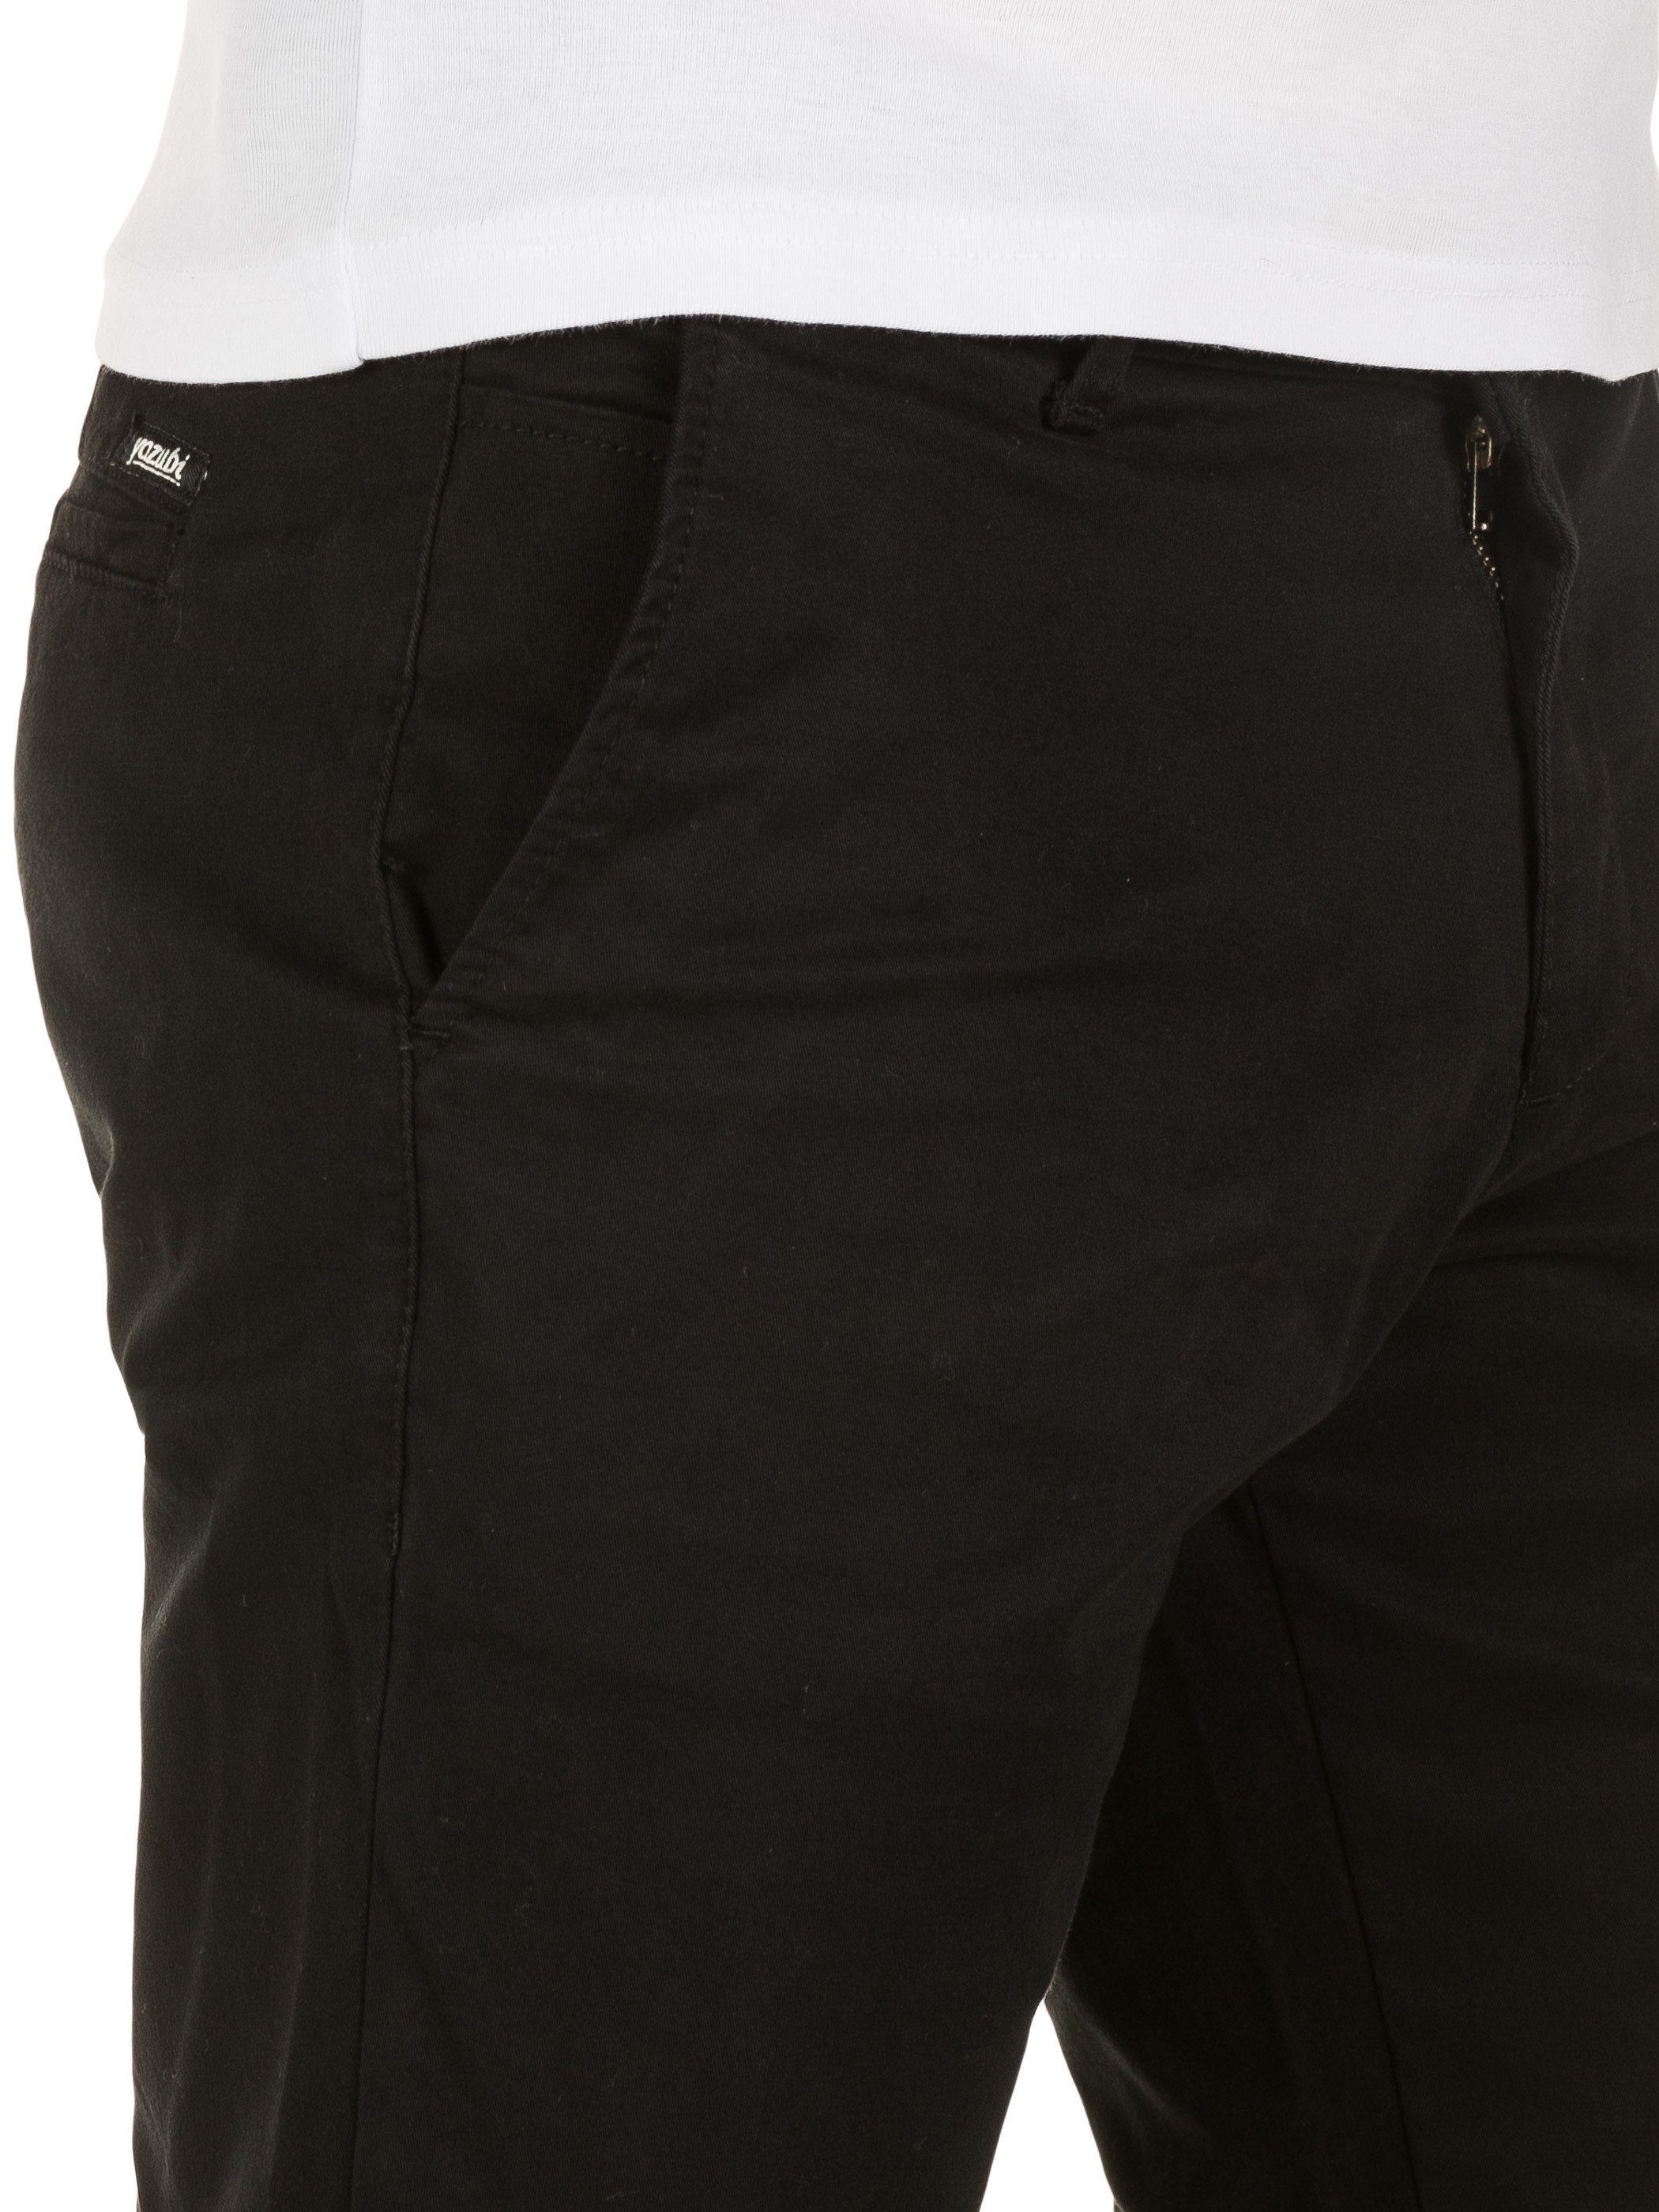 Yazubi Chinohose Chino mit Schwarz Tragekomfort hohem Pants black M192 194008) (